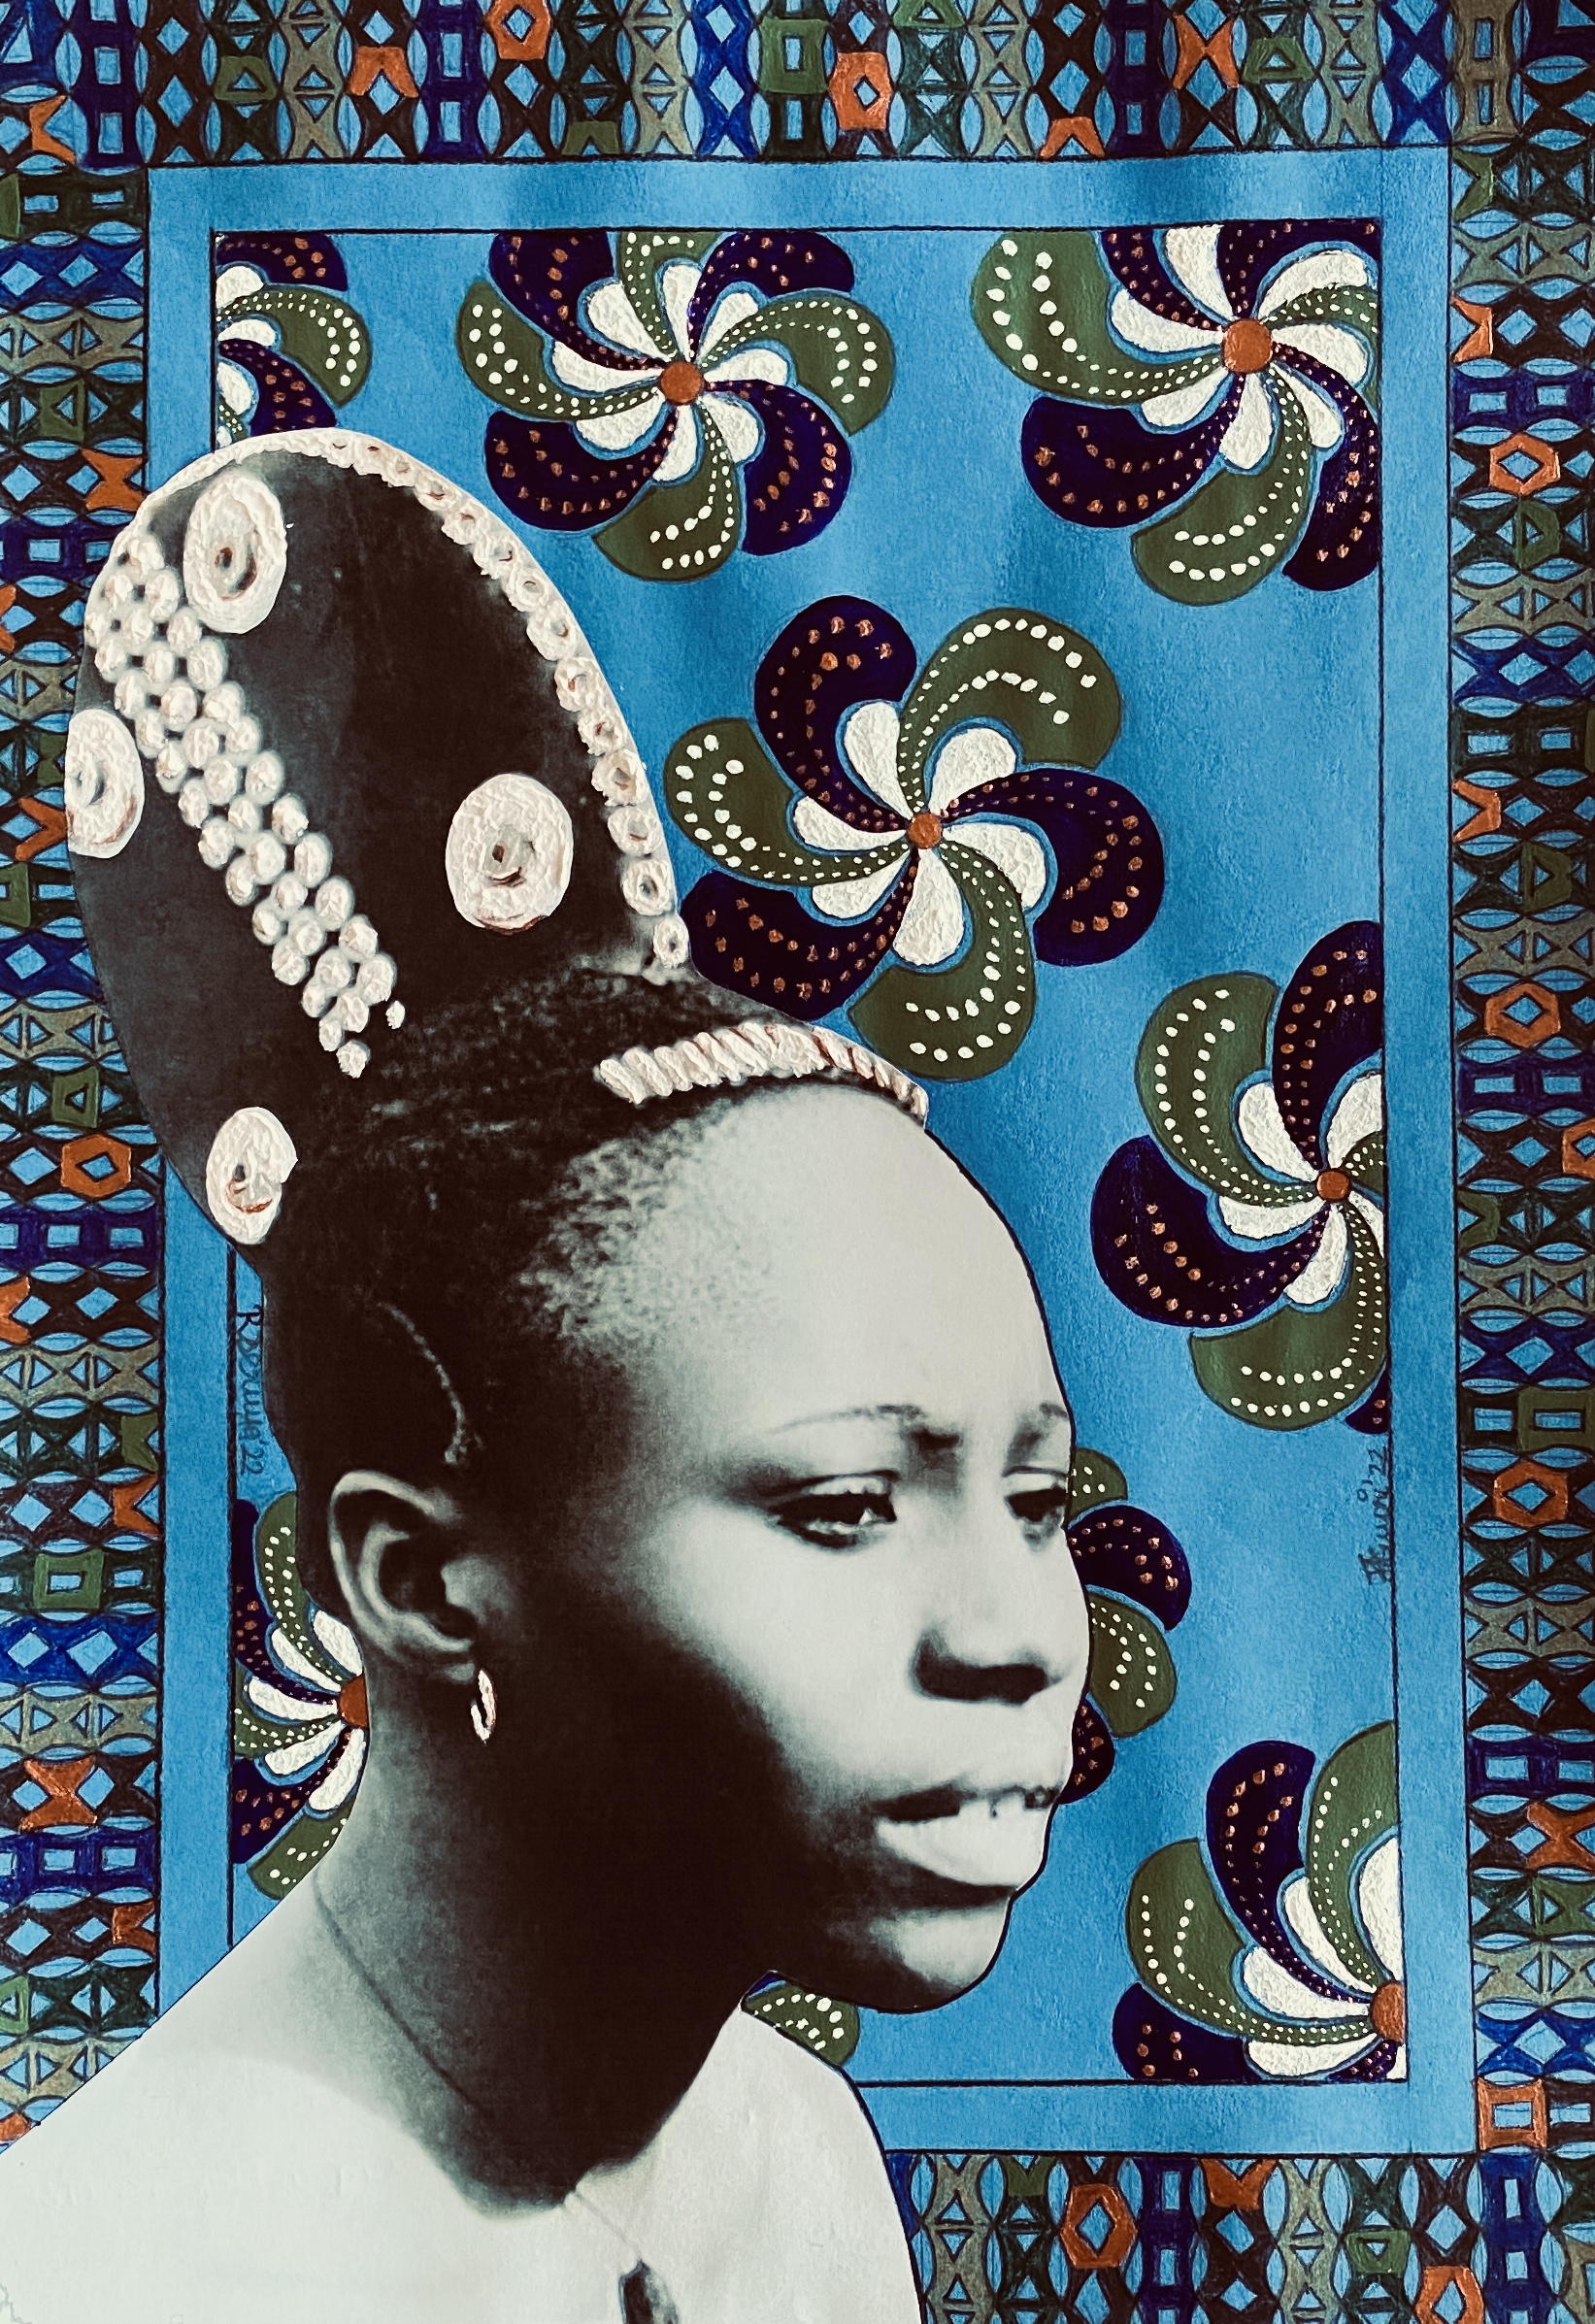 Kitamba 4 (Image used: Hairdressing in Nigeria, c.1965)